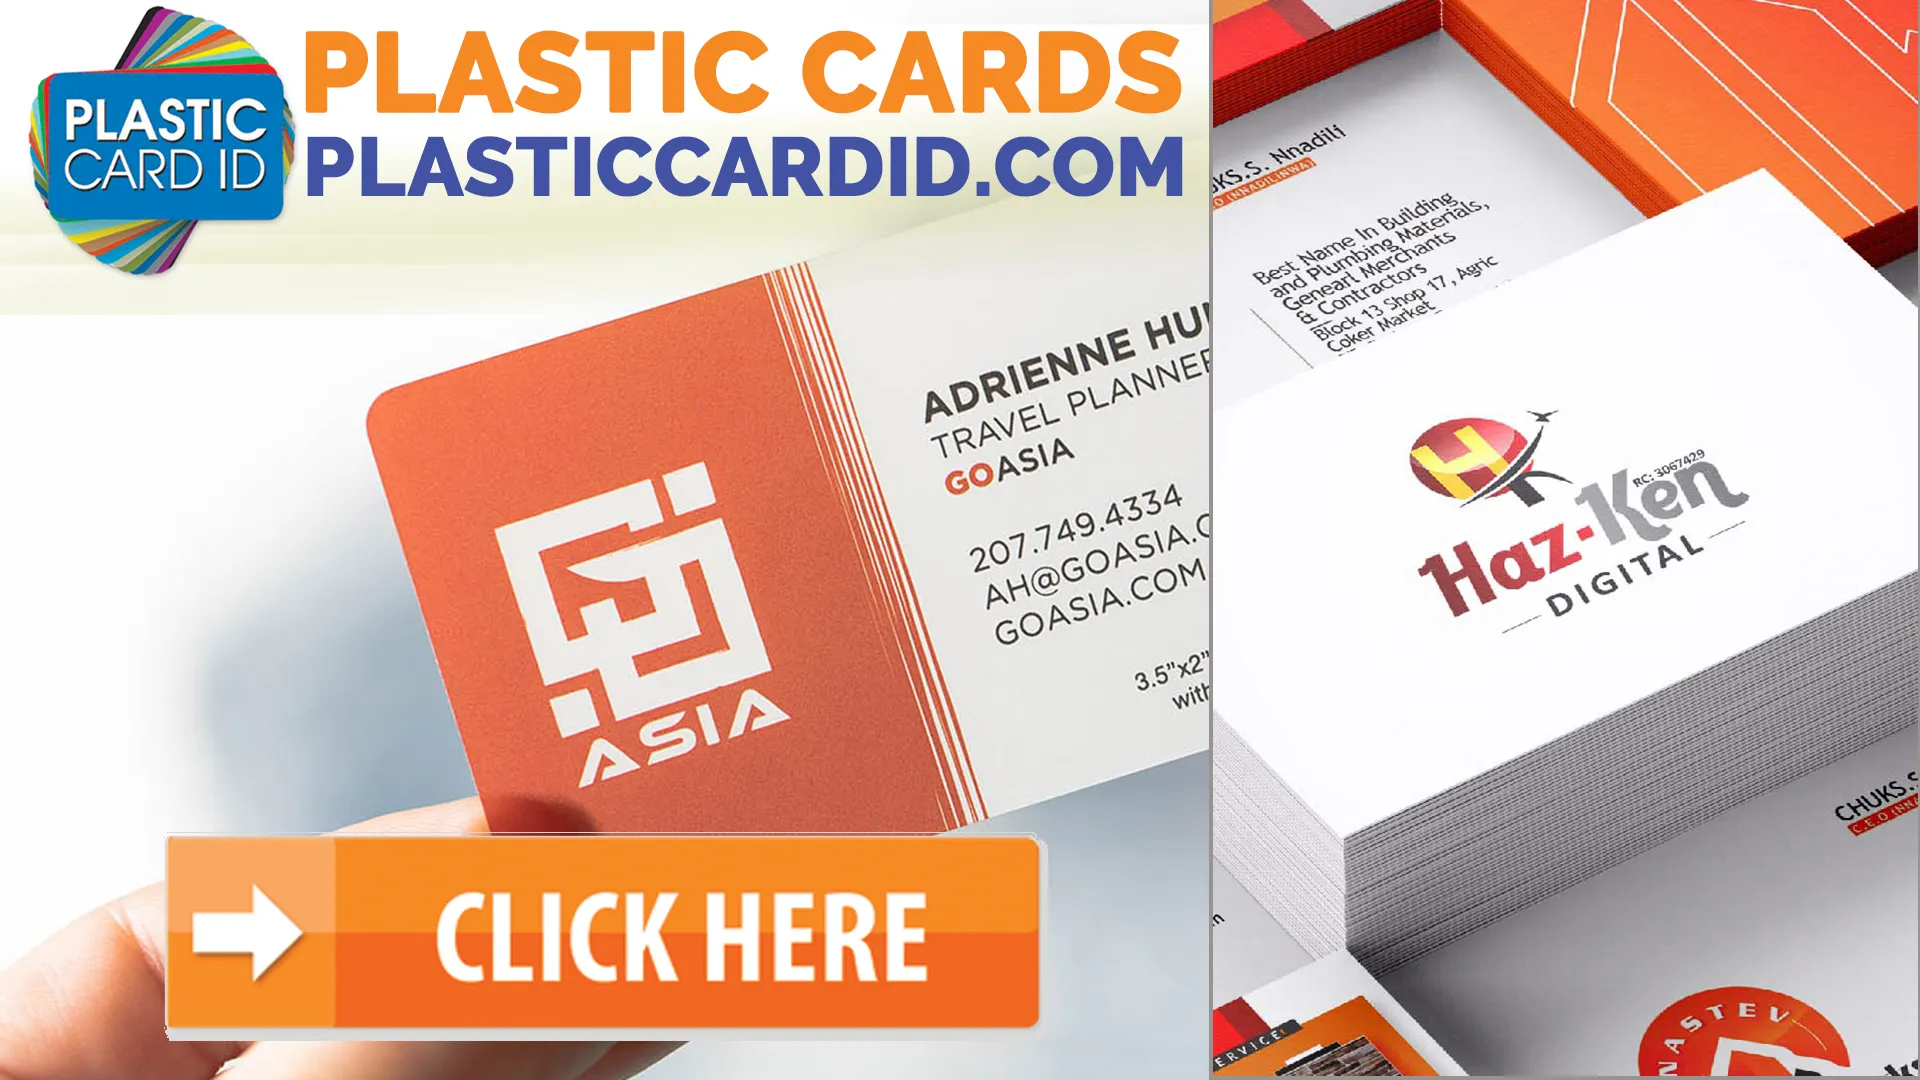 Reviews of Leading Plastic Card Printer Brands